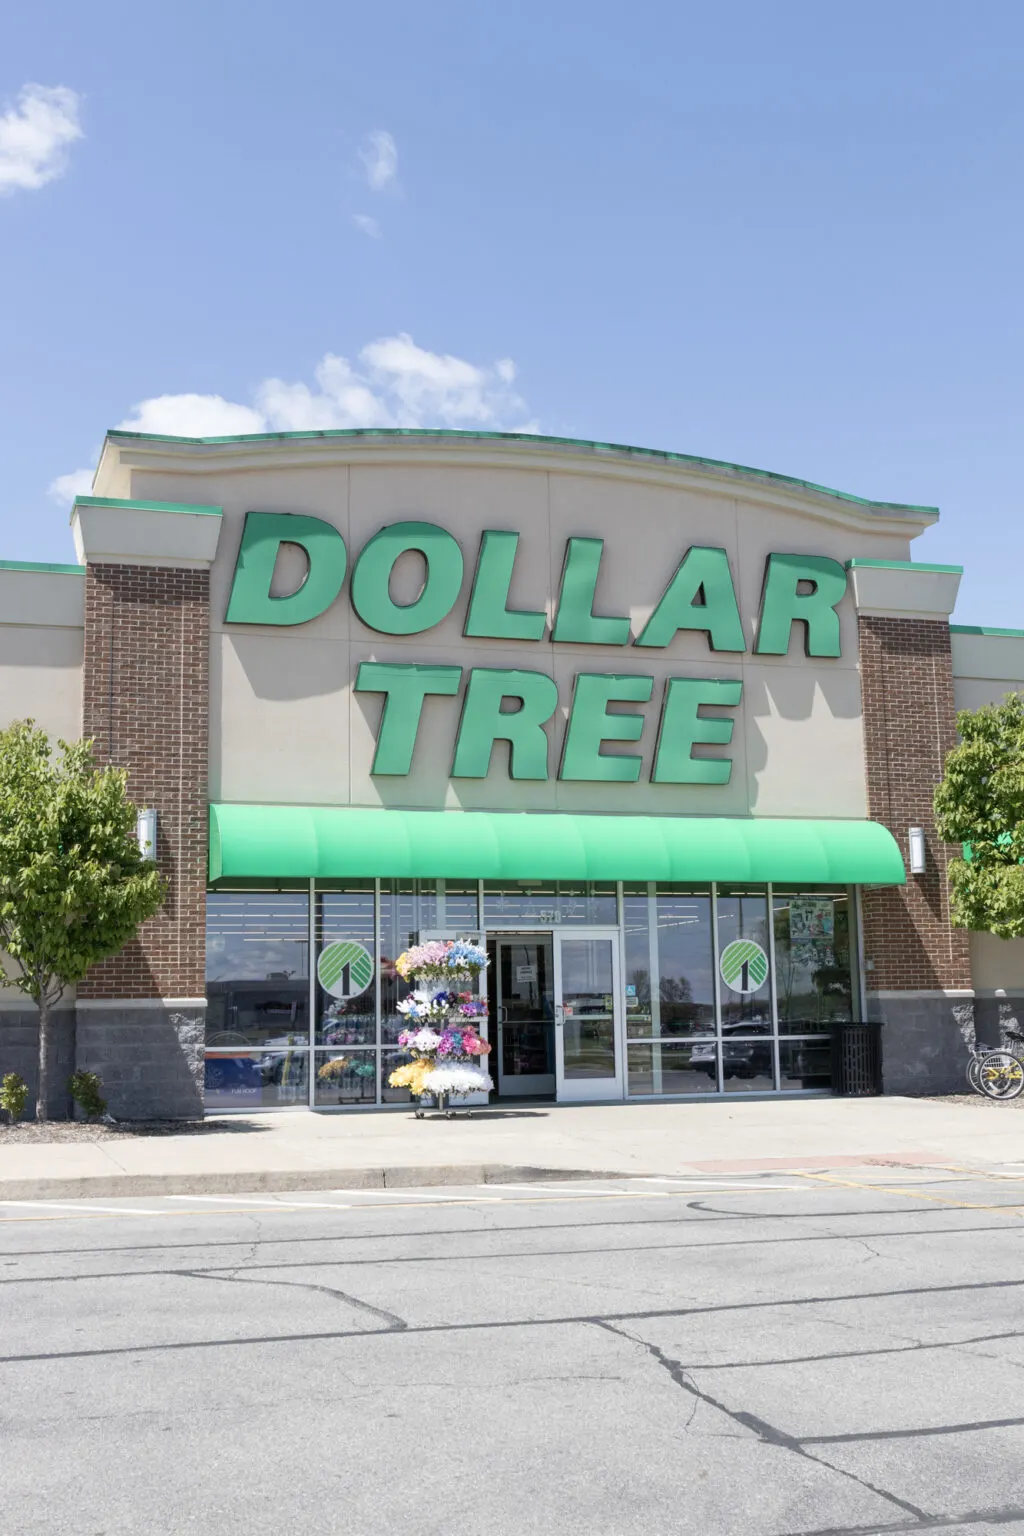 dollar tree store exterior